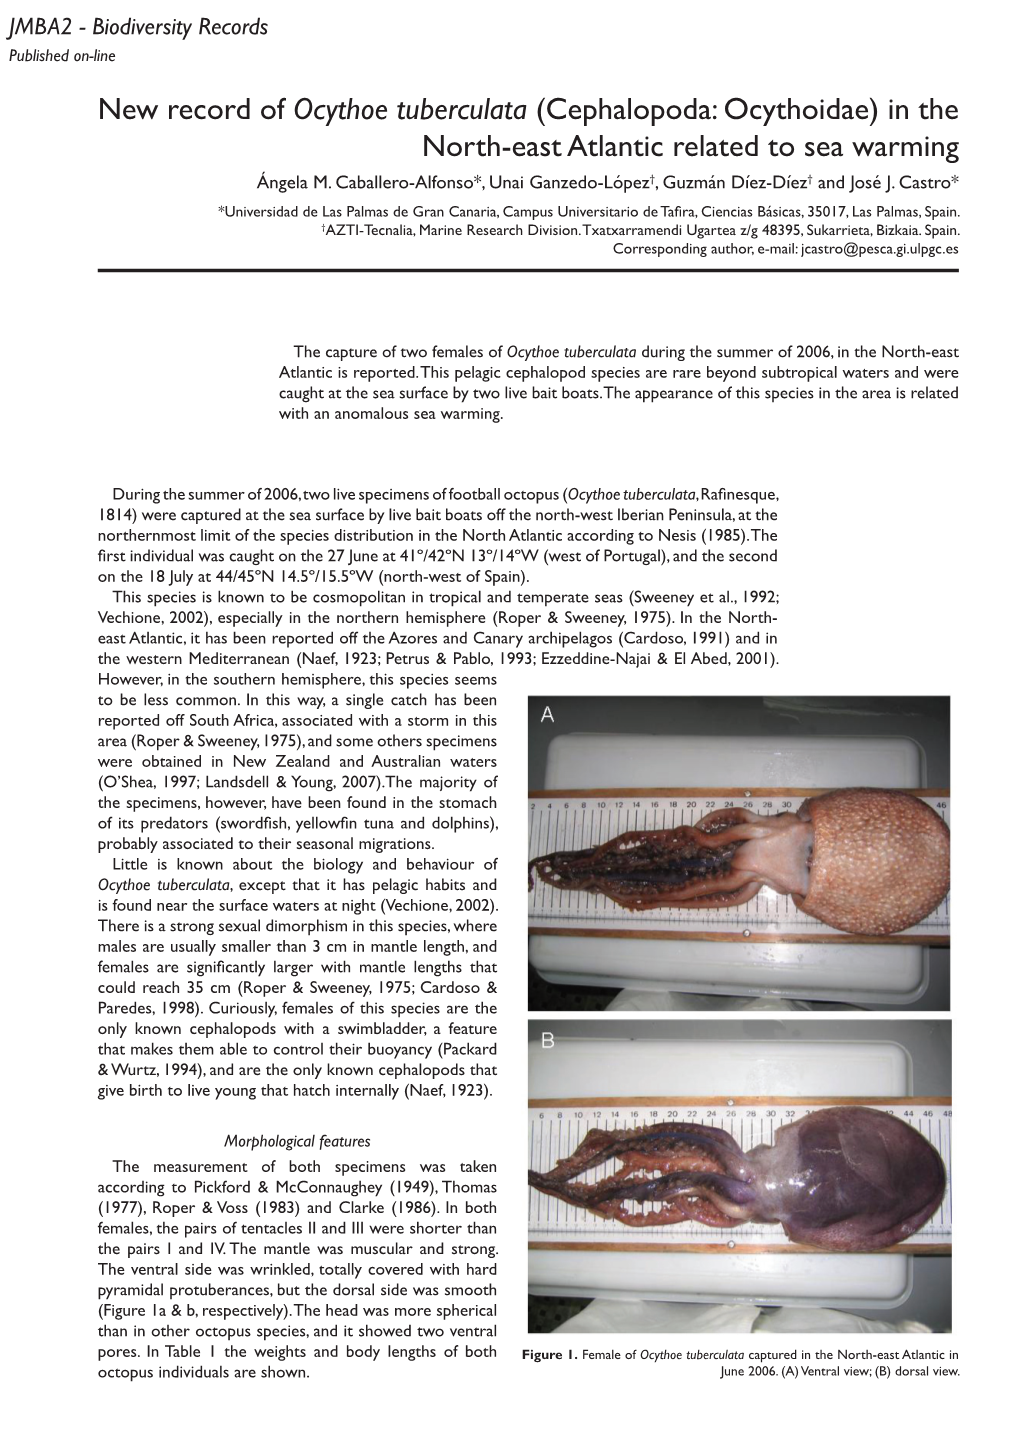 New Record of Ocythoe Tuberculata (Cephalopoda: Ocythoidae) in the North-East Atlantic Related to Sea Warming Ángela M